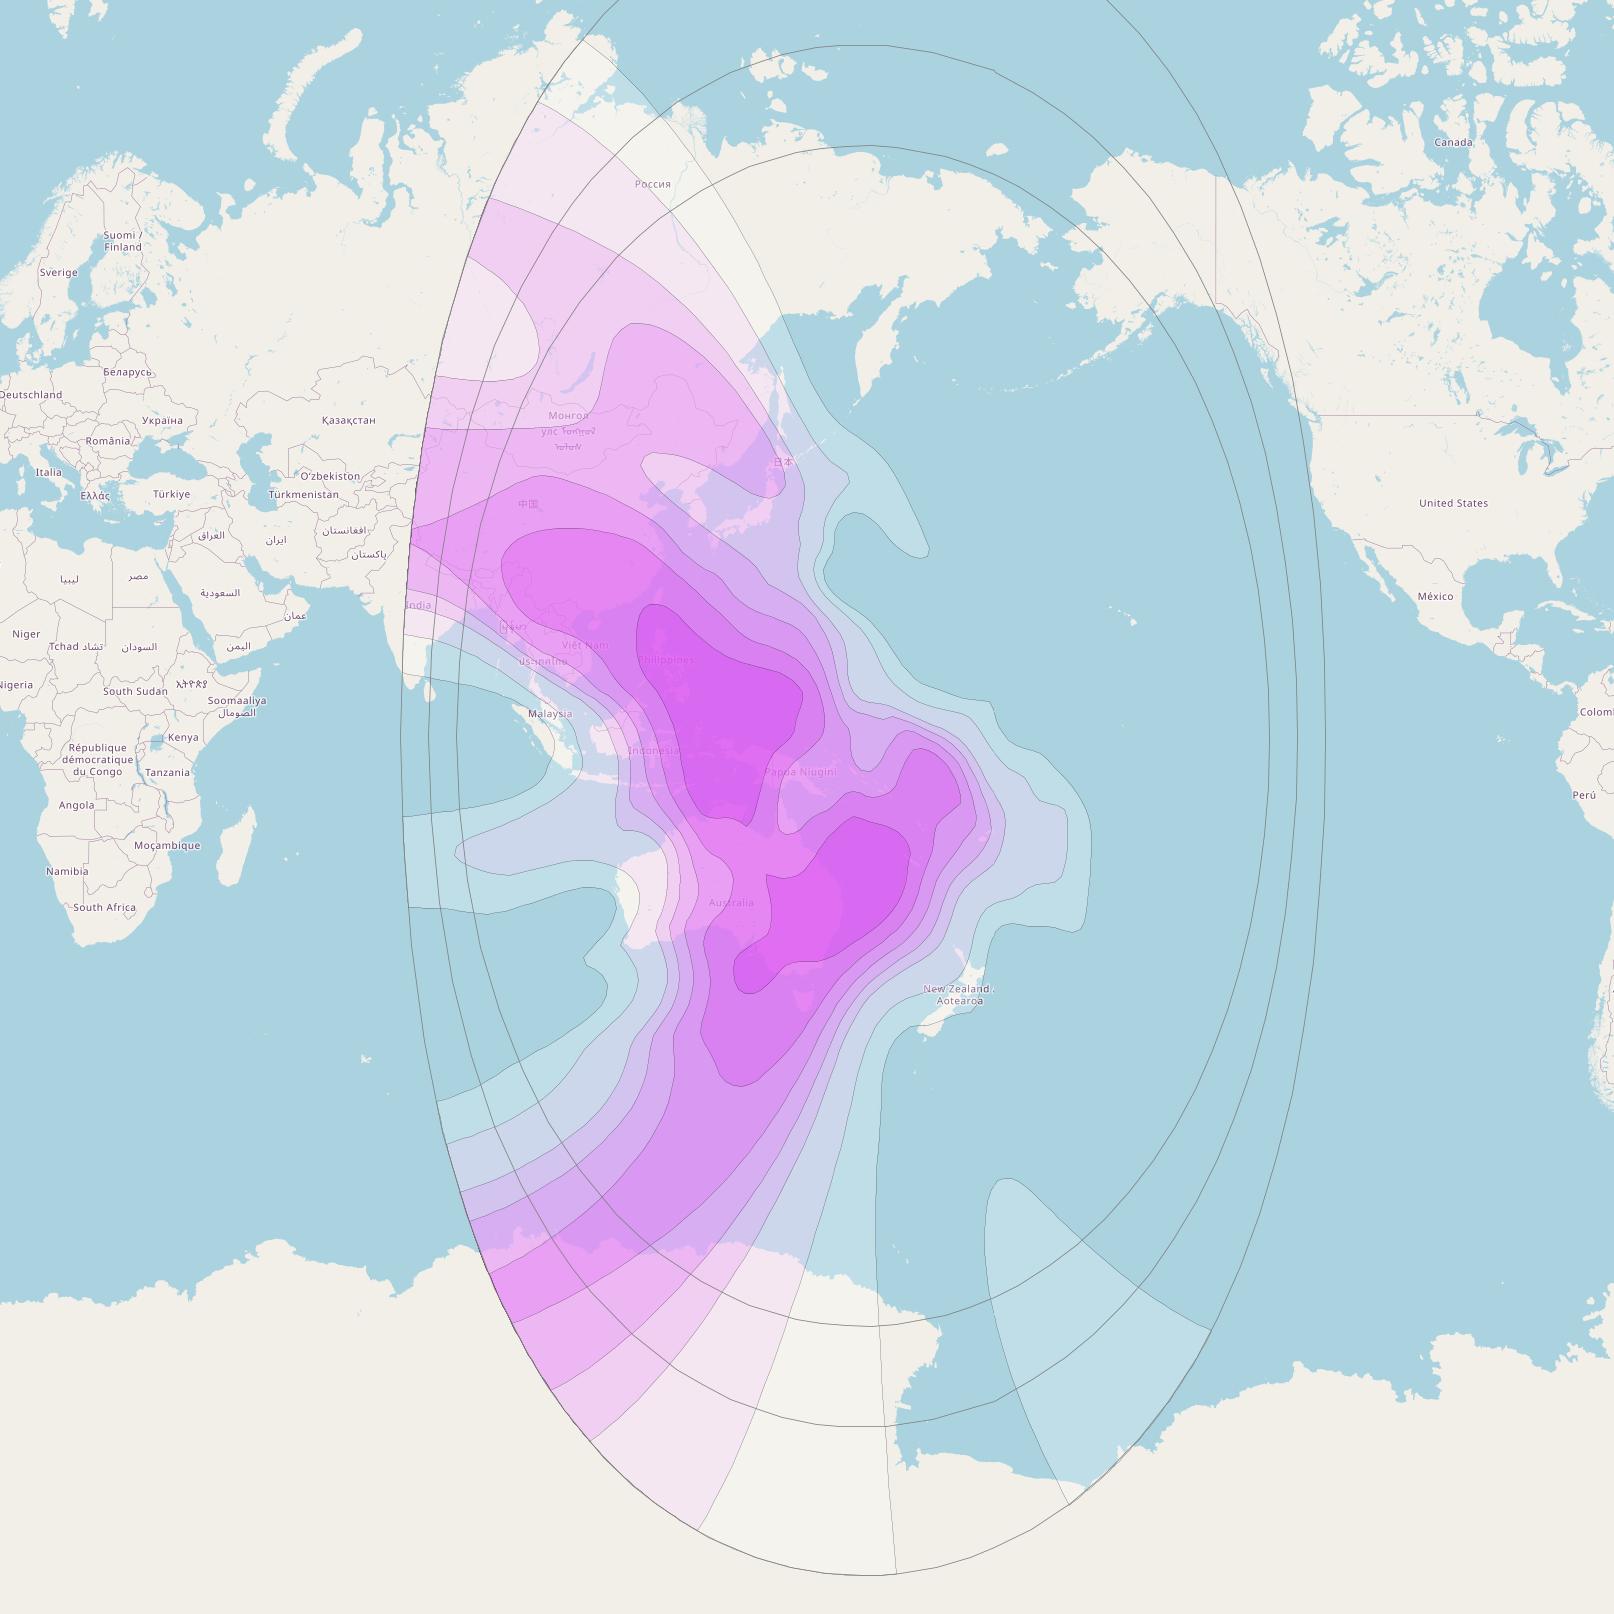 Intelsat 1R at 157° E downlink C-band Asia-Australia V beam coverage map